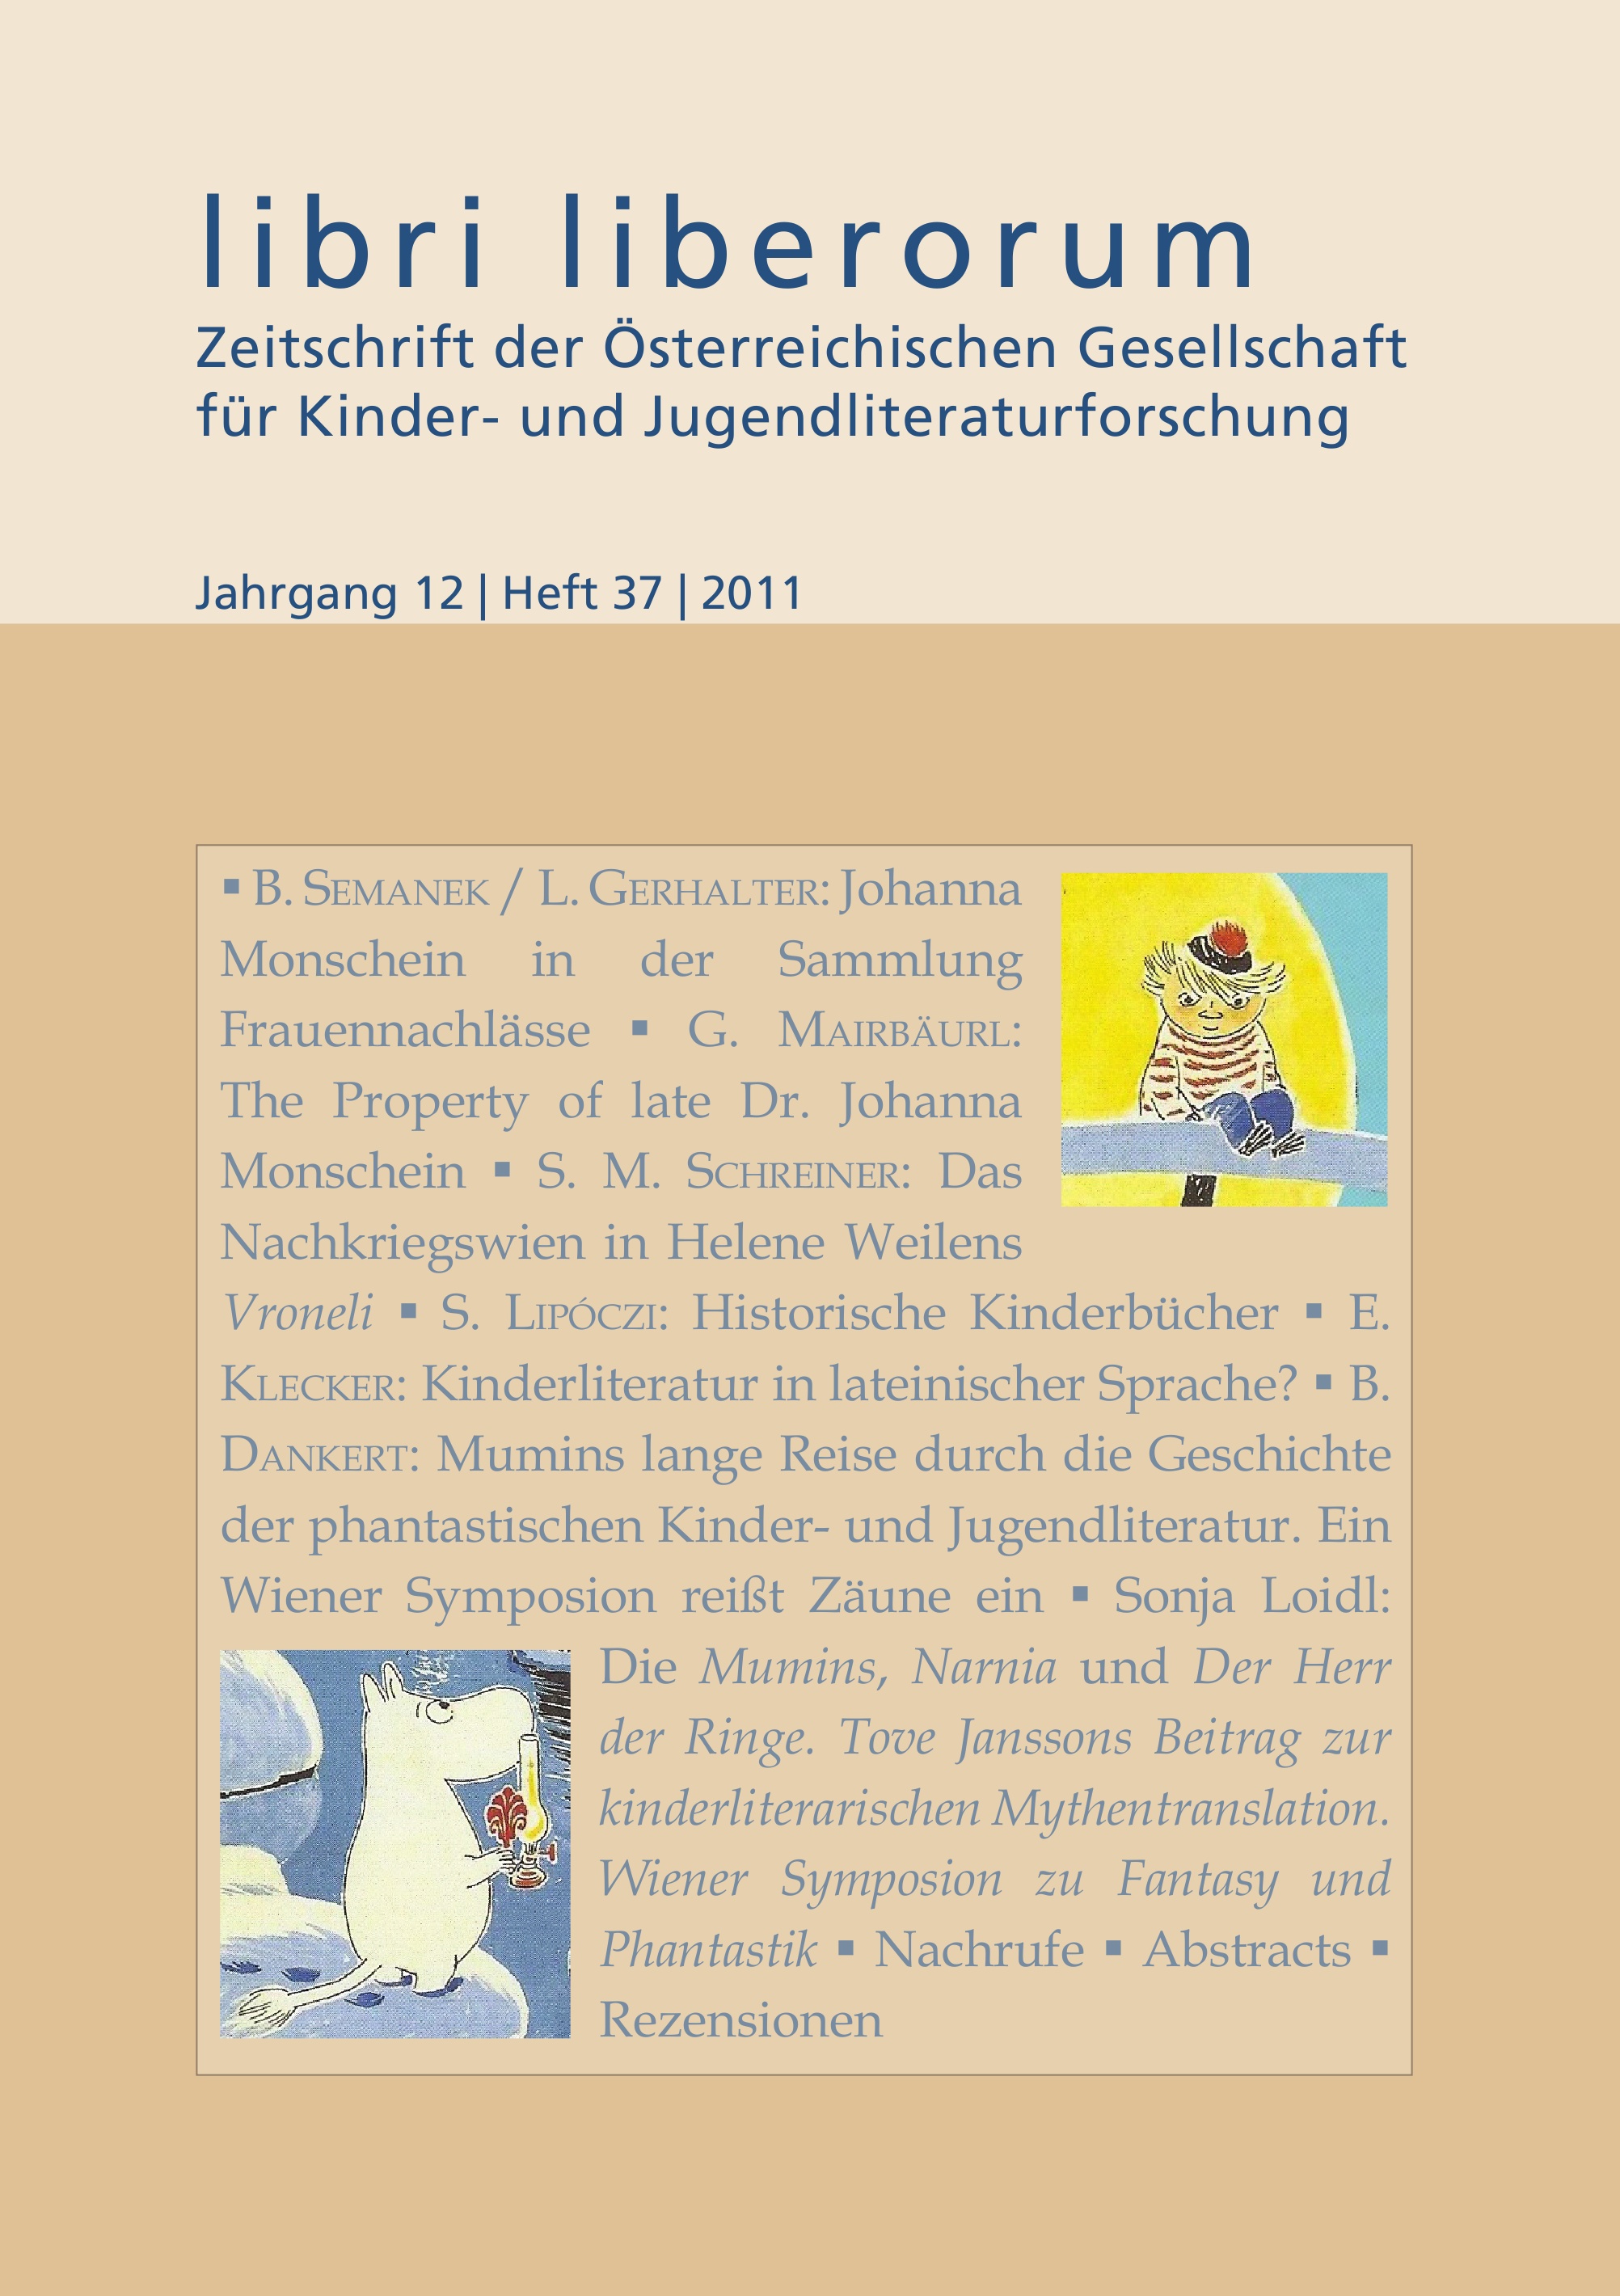 					Ansehen libri liberorum (Jahrgang 12/Heft 37/2011)
				